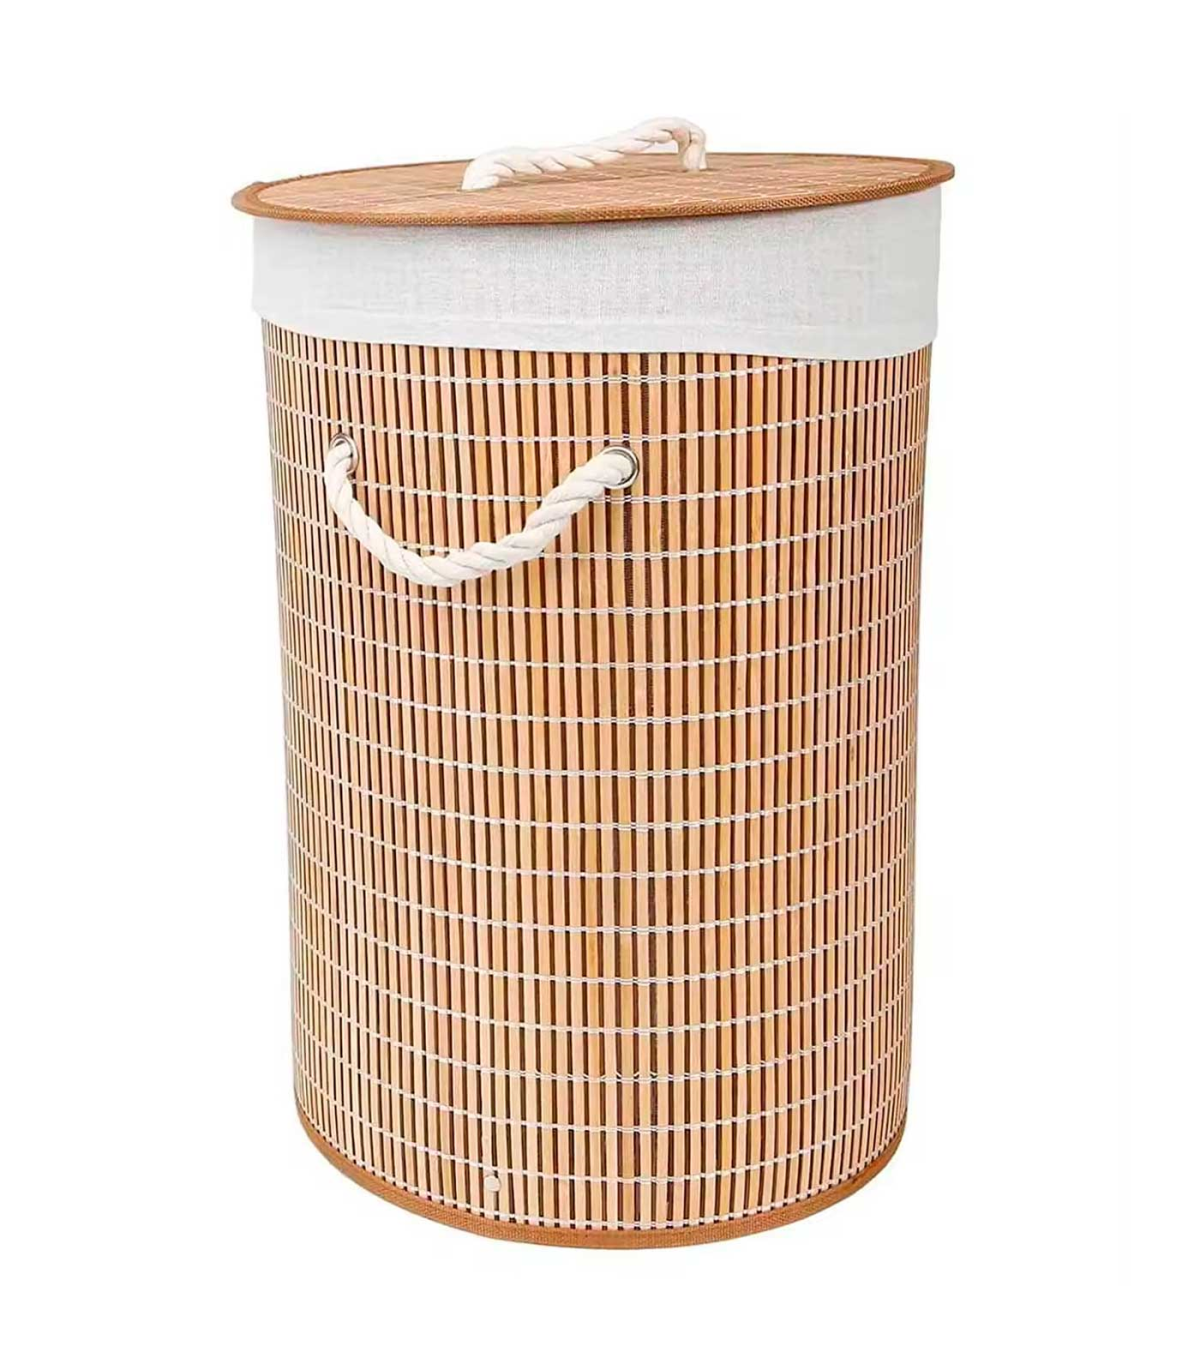 Tradineur - Cesto plegable redondo de bambú para ropa sucia, 1  compartimento, incluye asas, tapa y bolsa de tela extraíble y lav